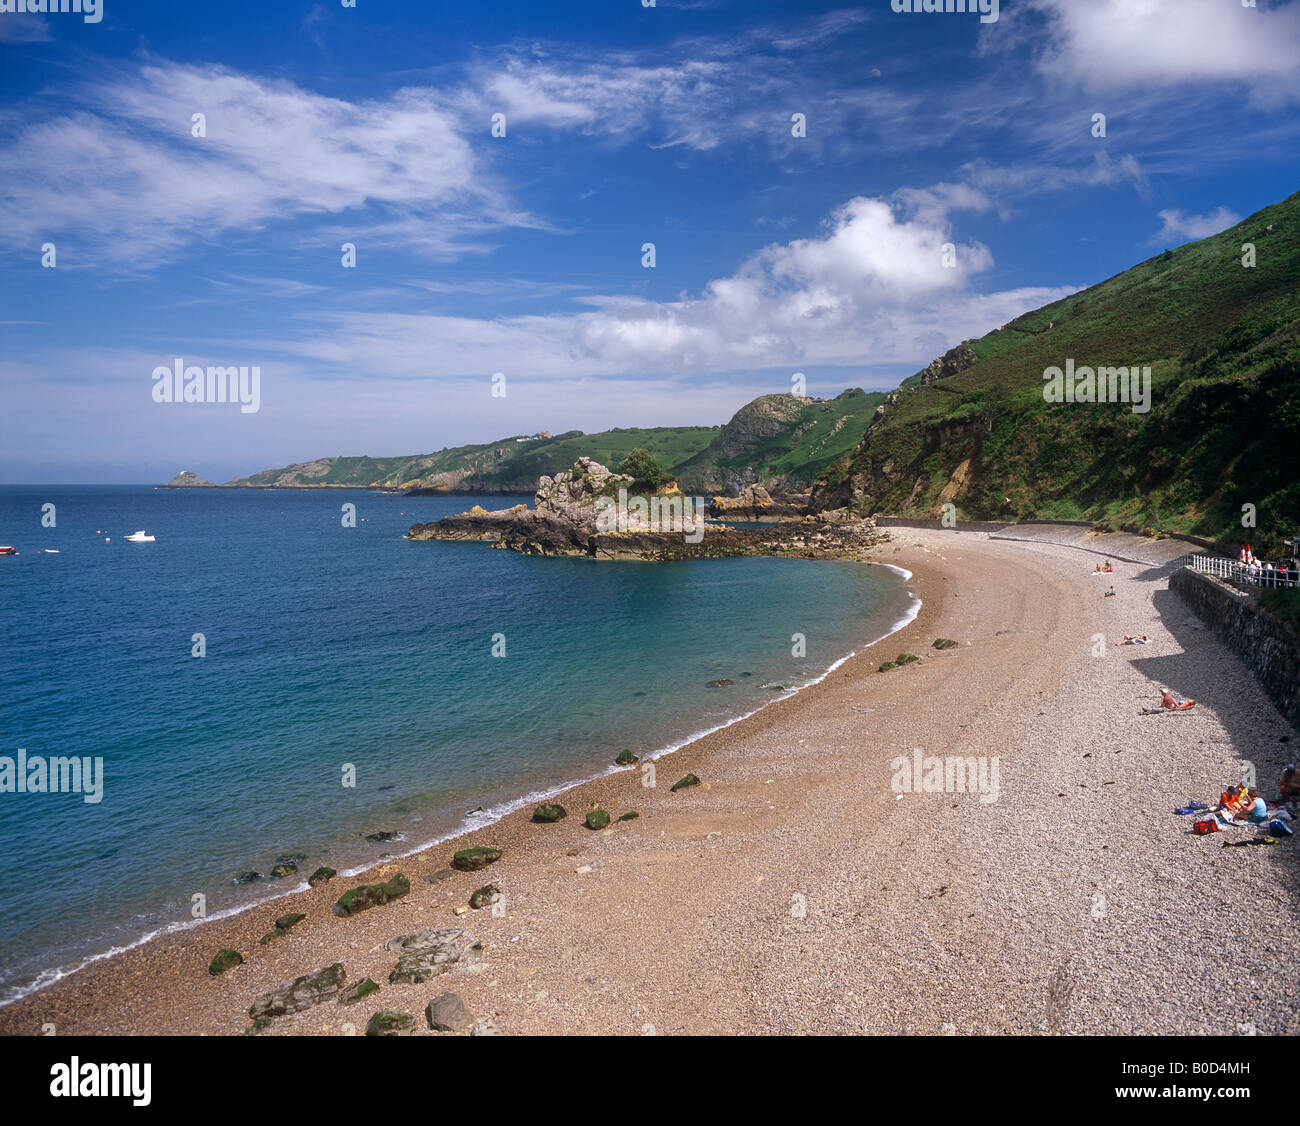 Jersey, Channel Islands, UK Stock Photo 